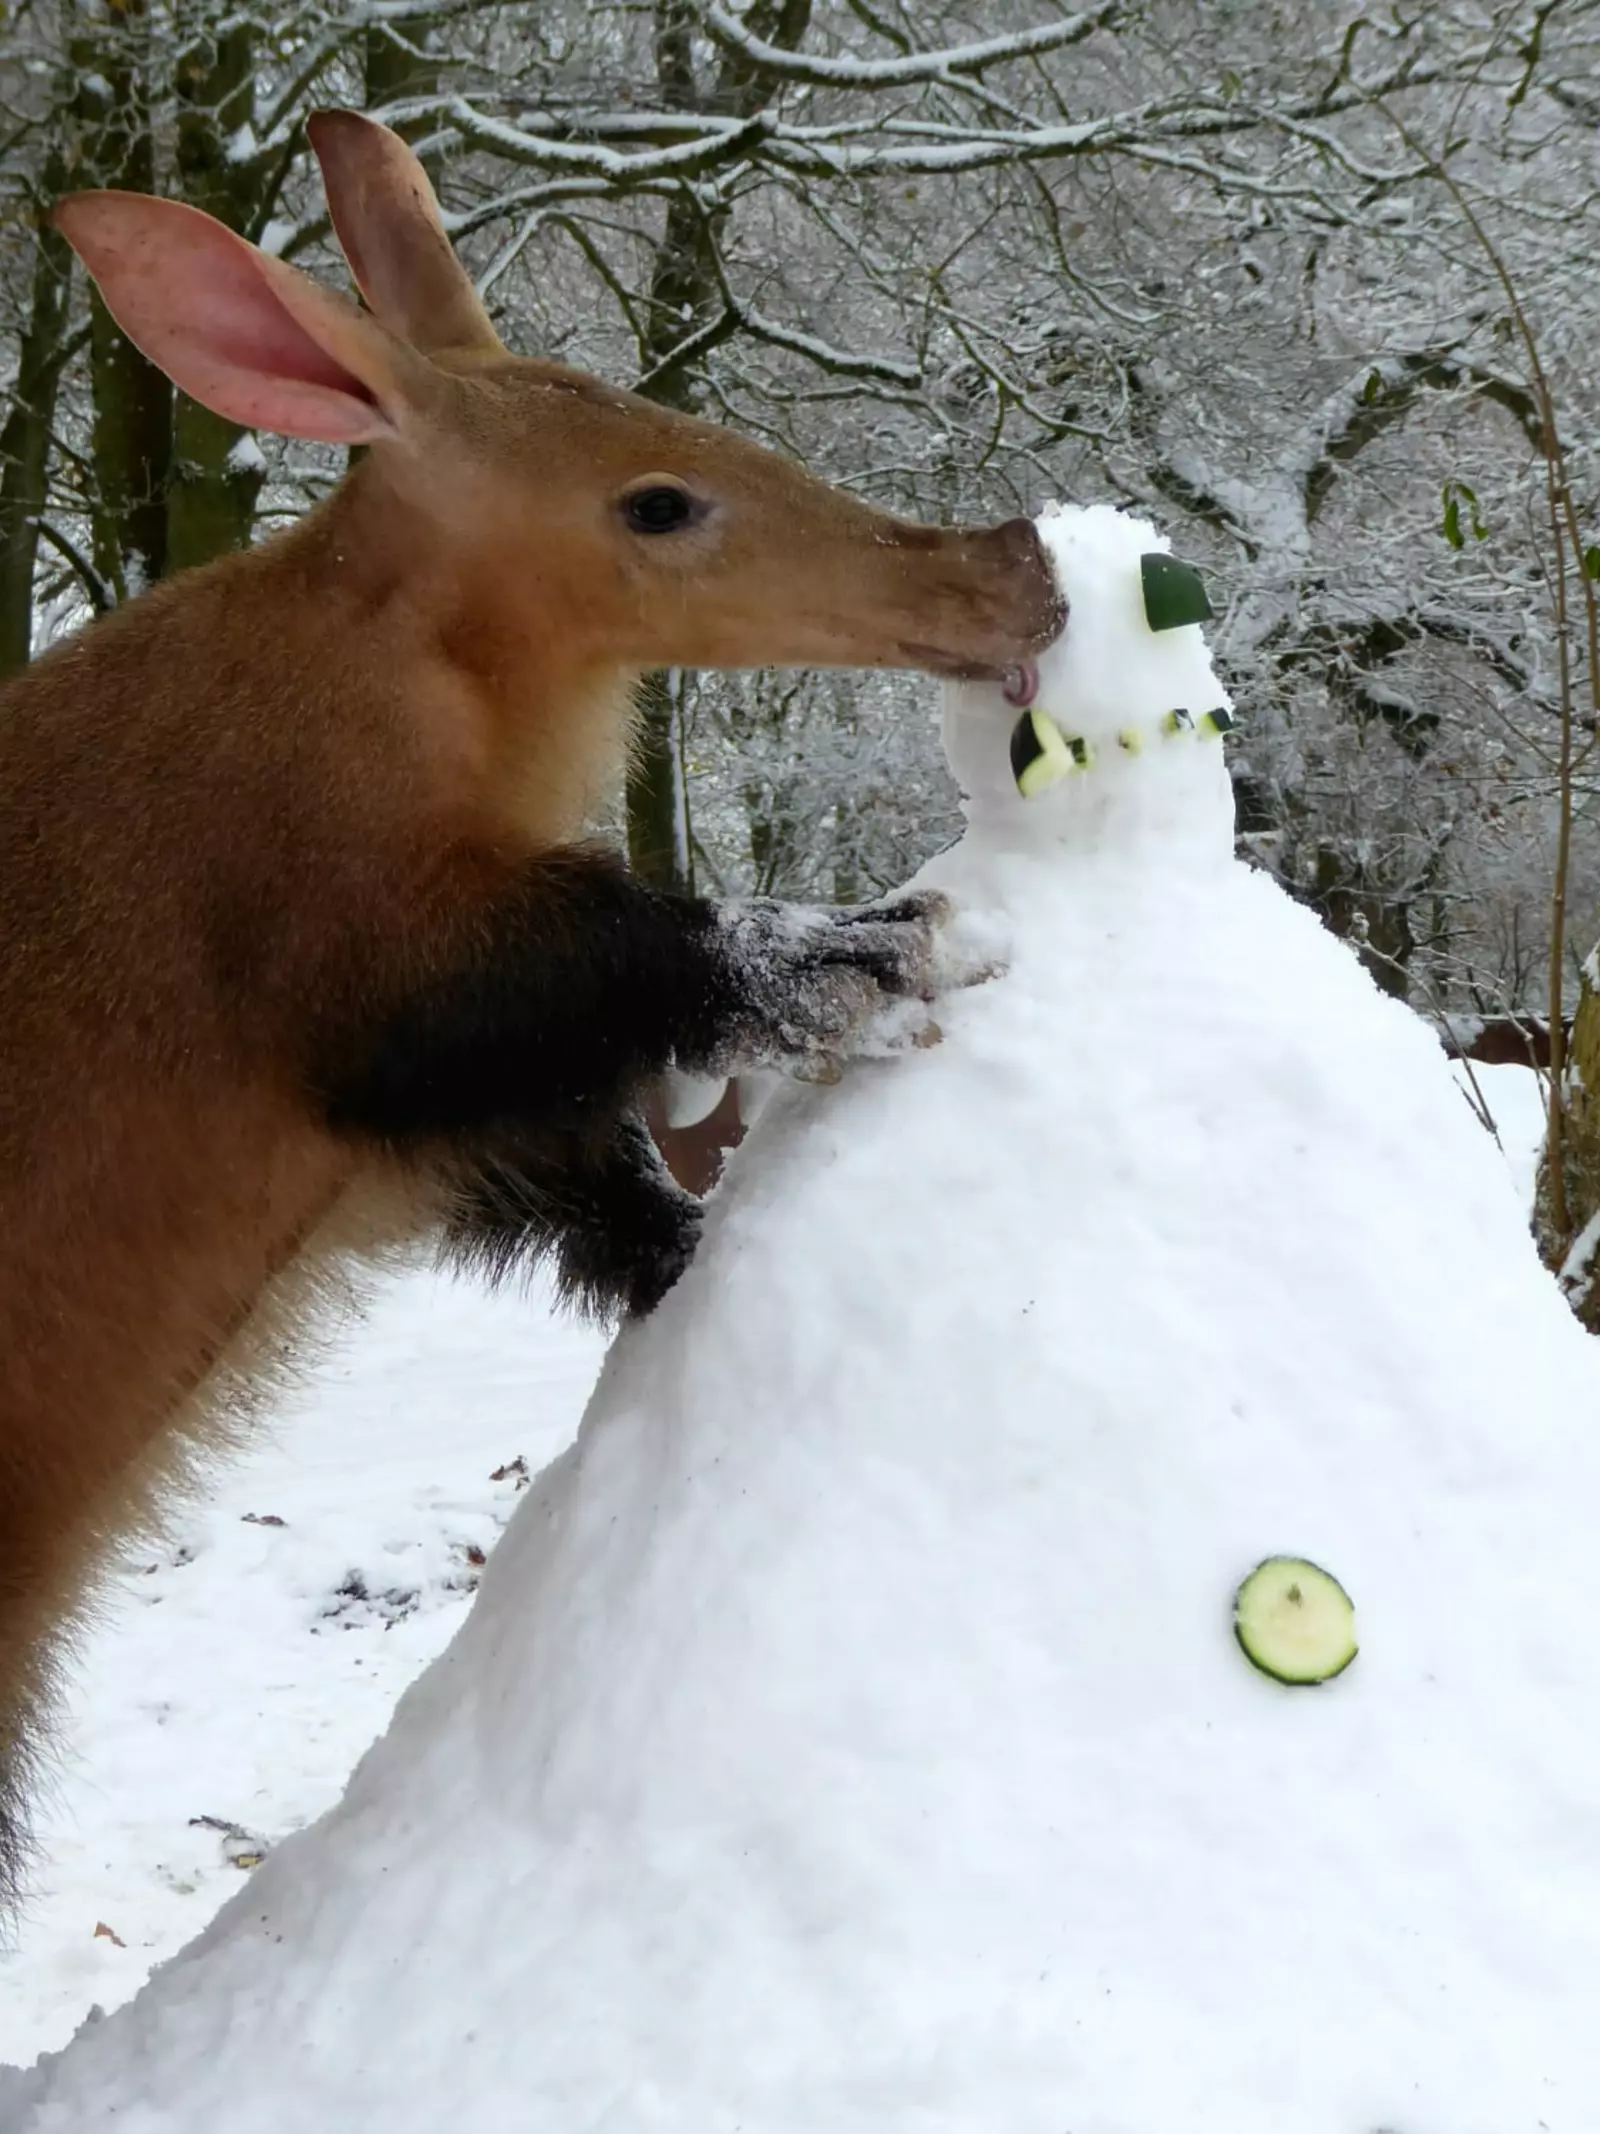 An aardvark explores a snowman at Whipsnade Zoo